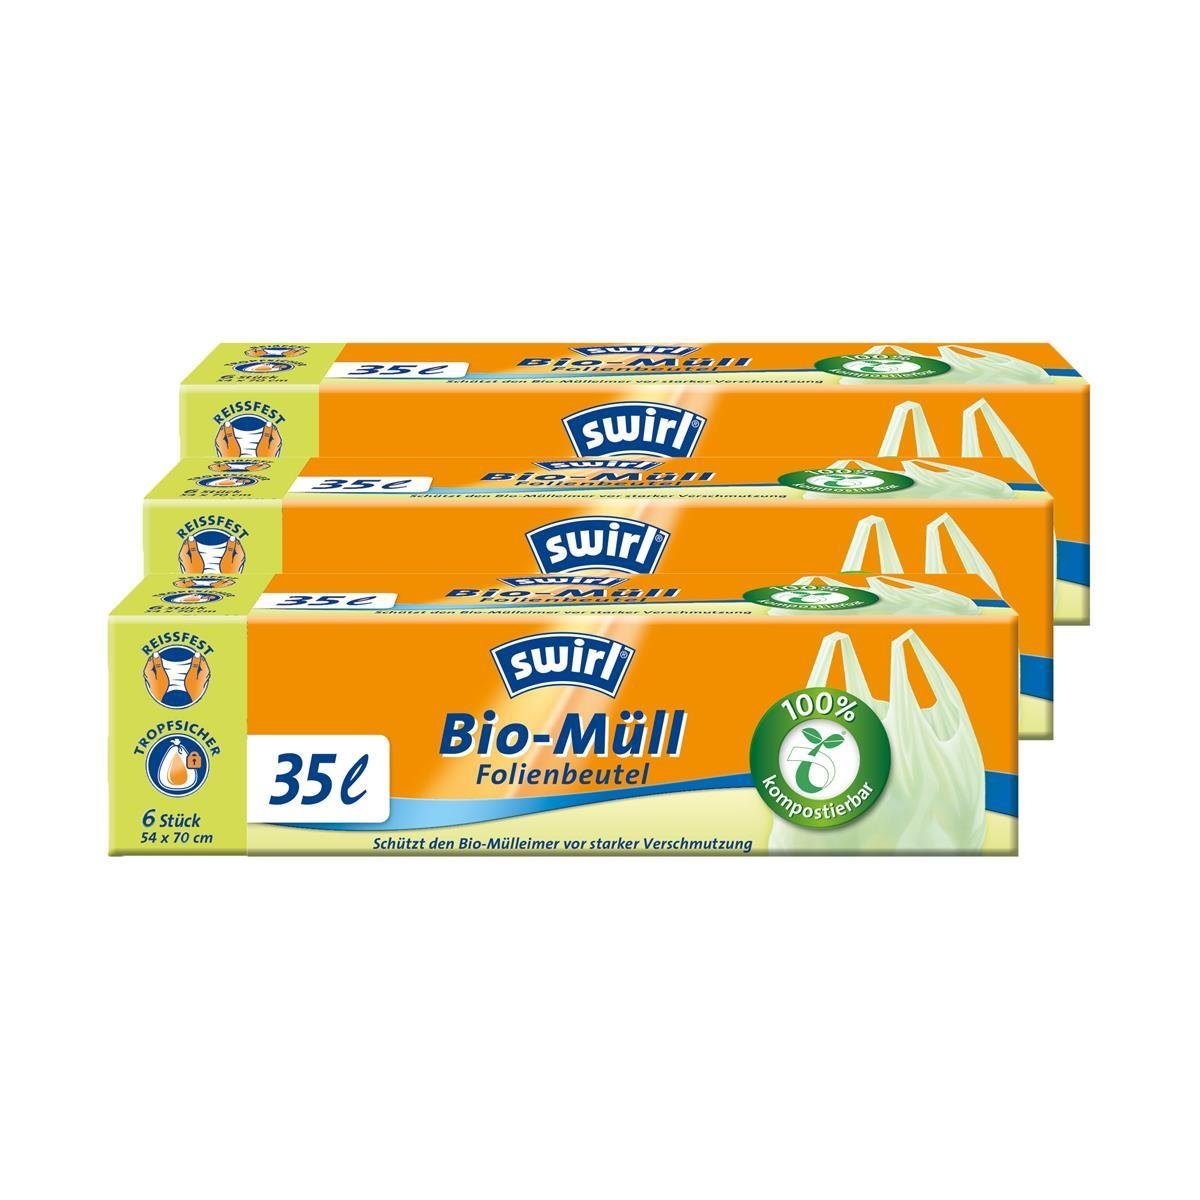 35l Folien-Beutel Bio-Müll Pack mit Swirl Müllbeutel Swirl Tragegriff 6stk./Rolle (3er